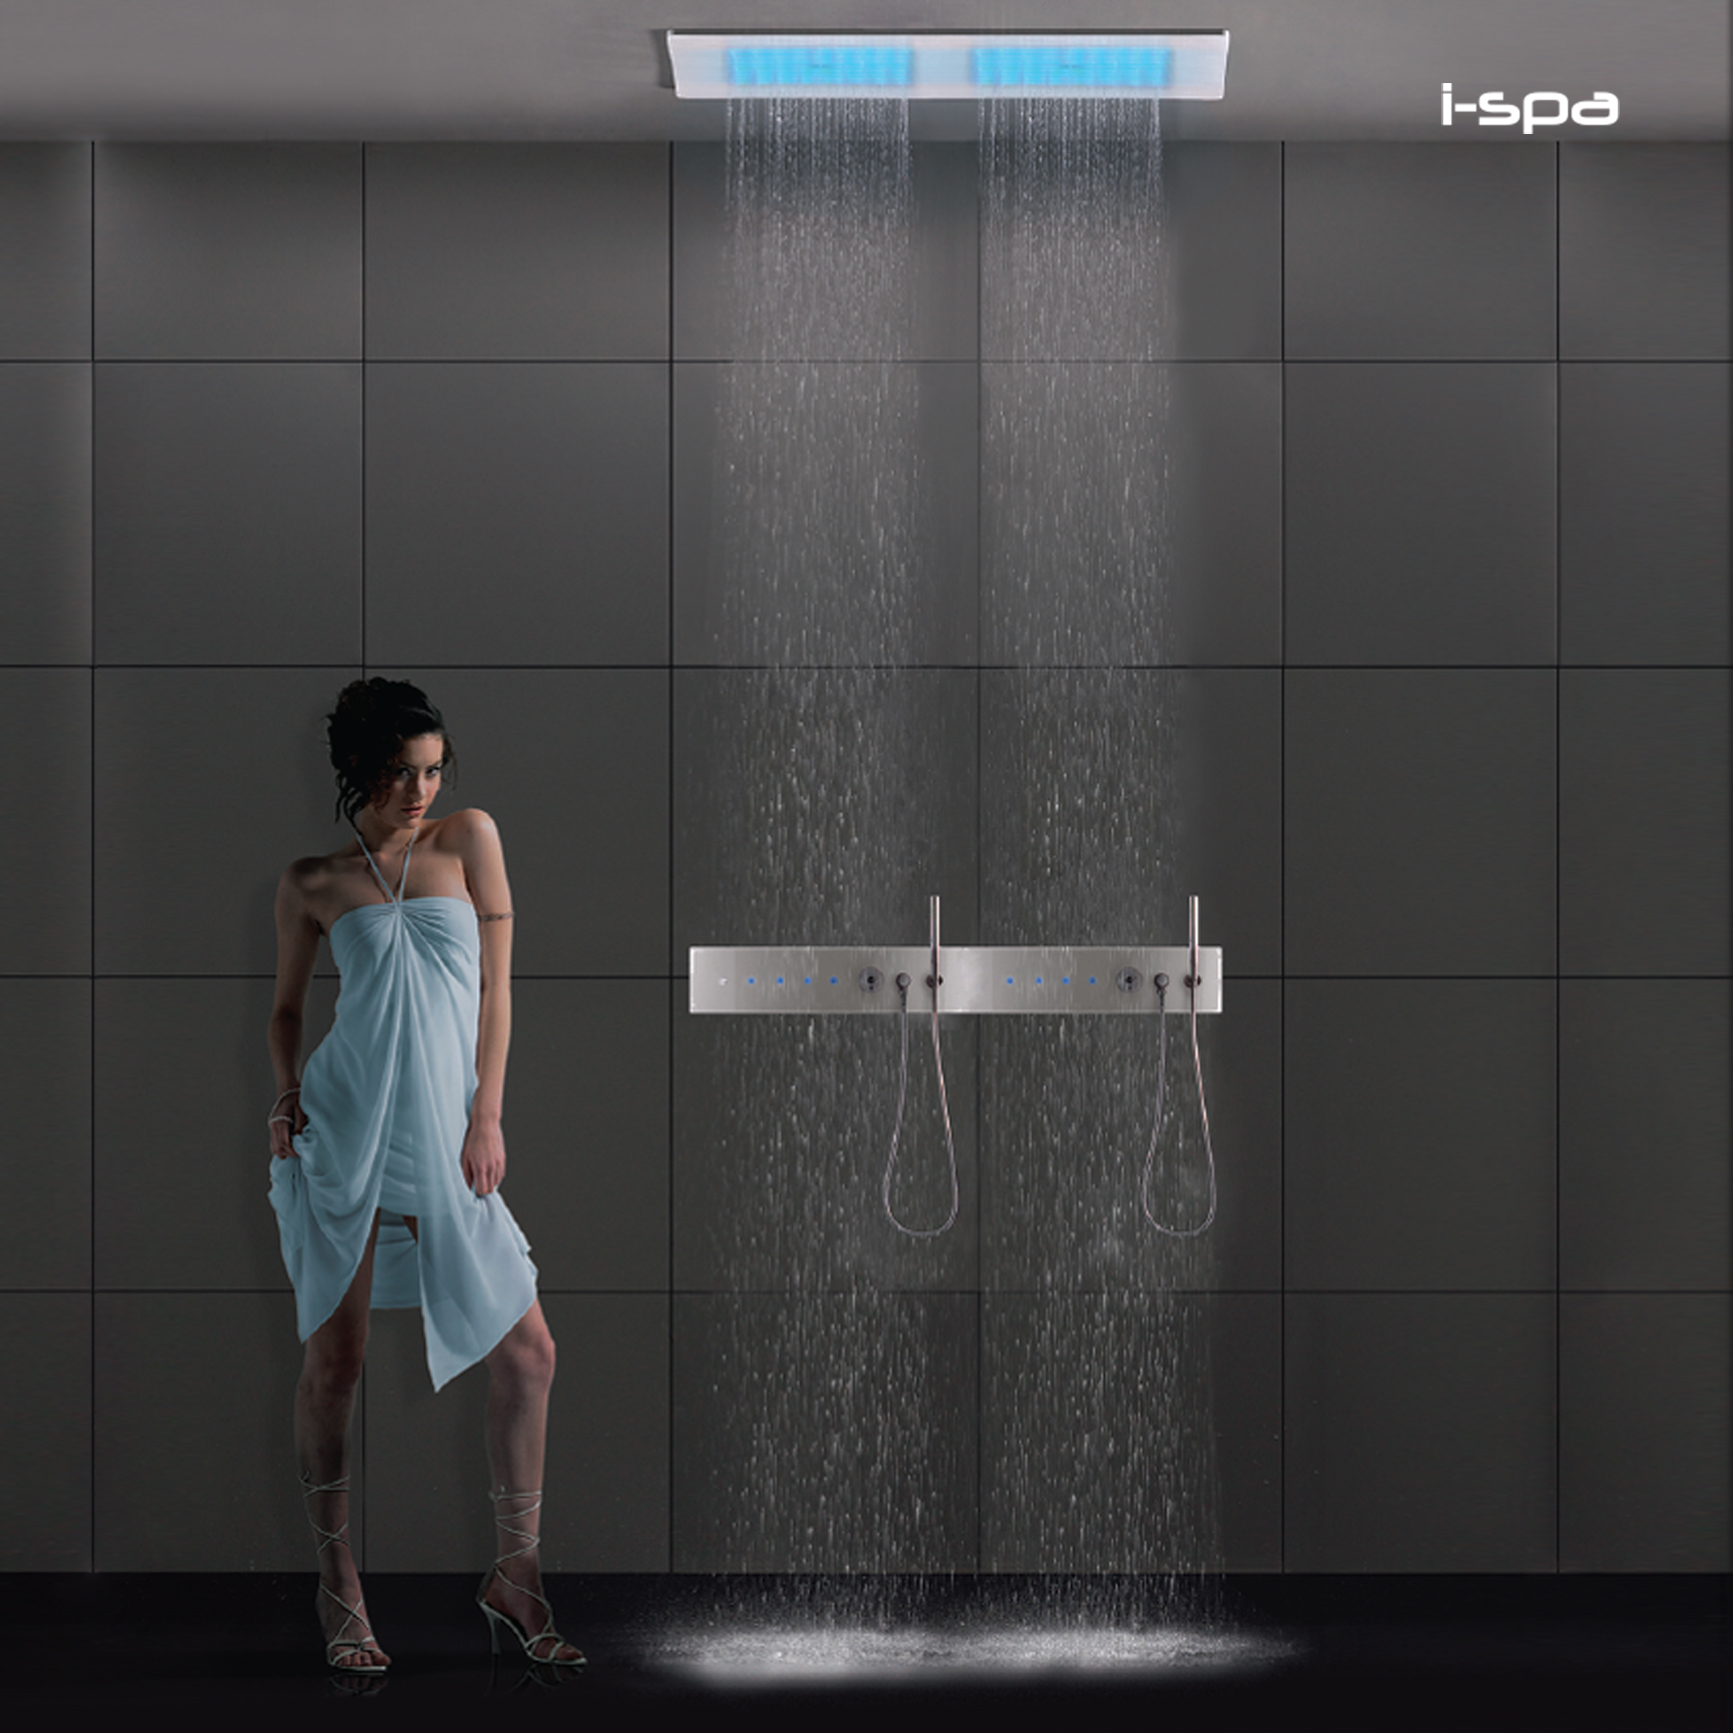 I-Rain 4A Shower Series